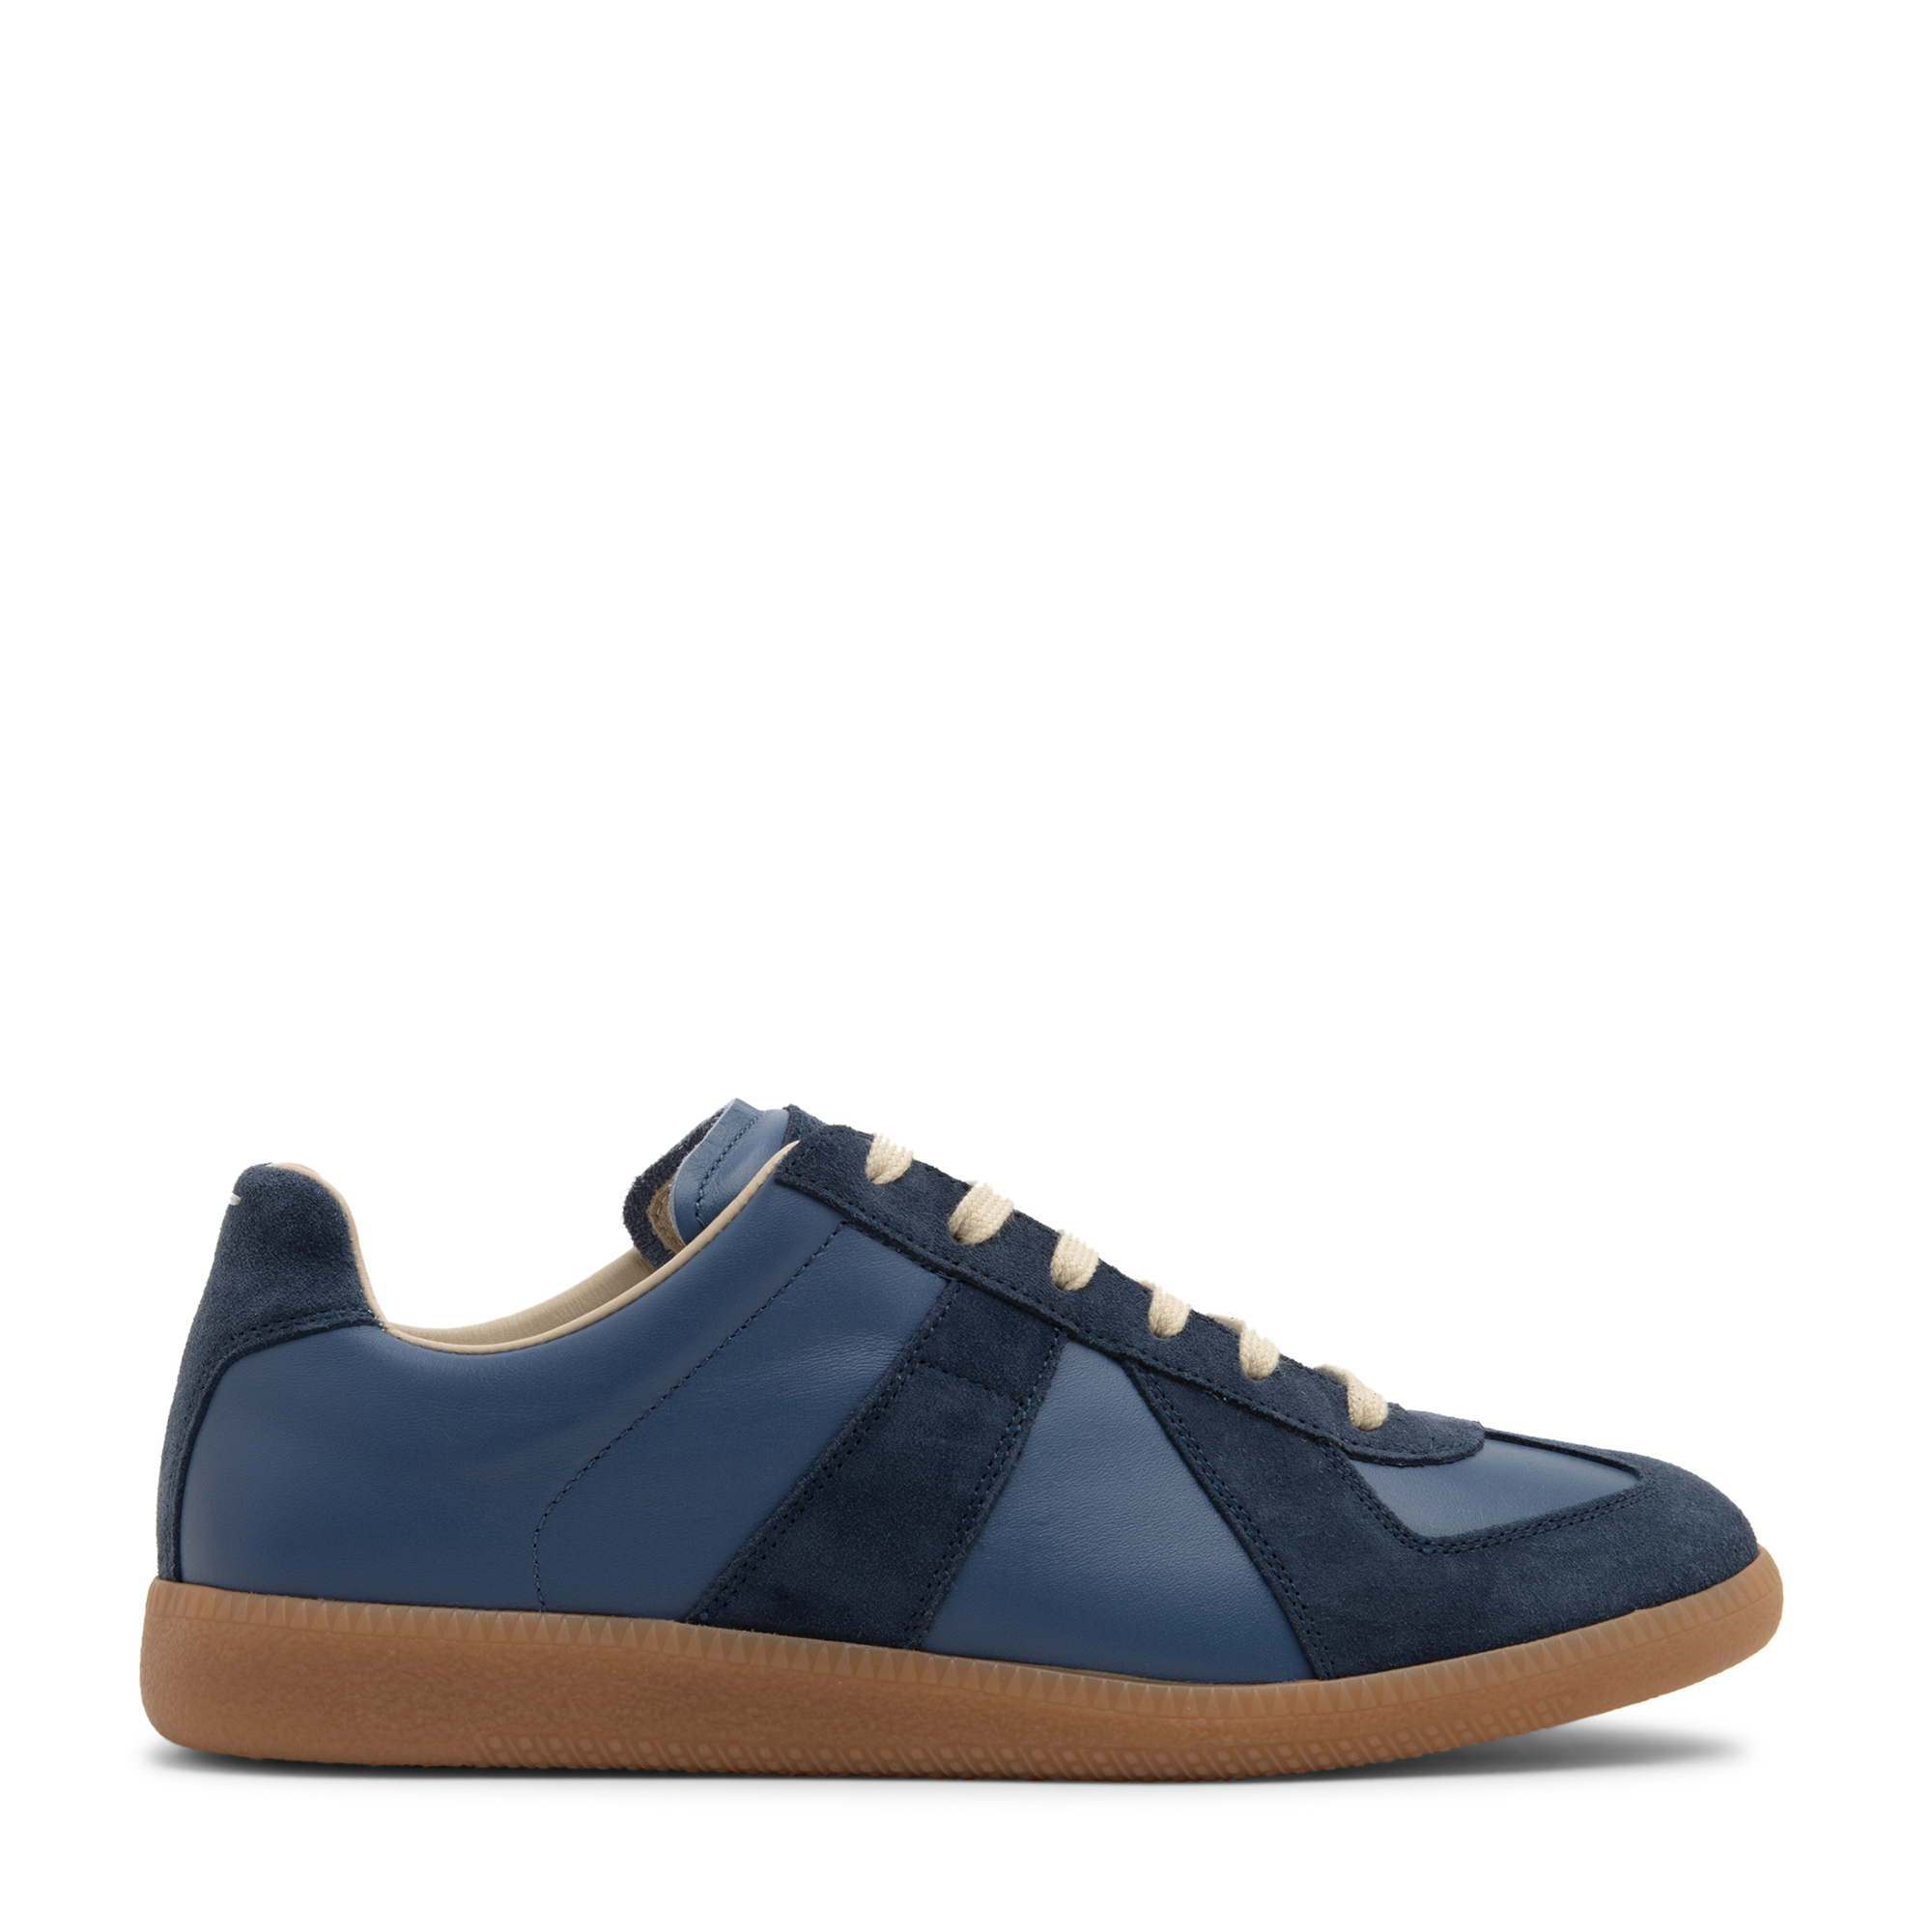 Maison Margiela Replica sneakers for Men - Blue in KSA | Level Shoes